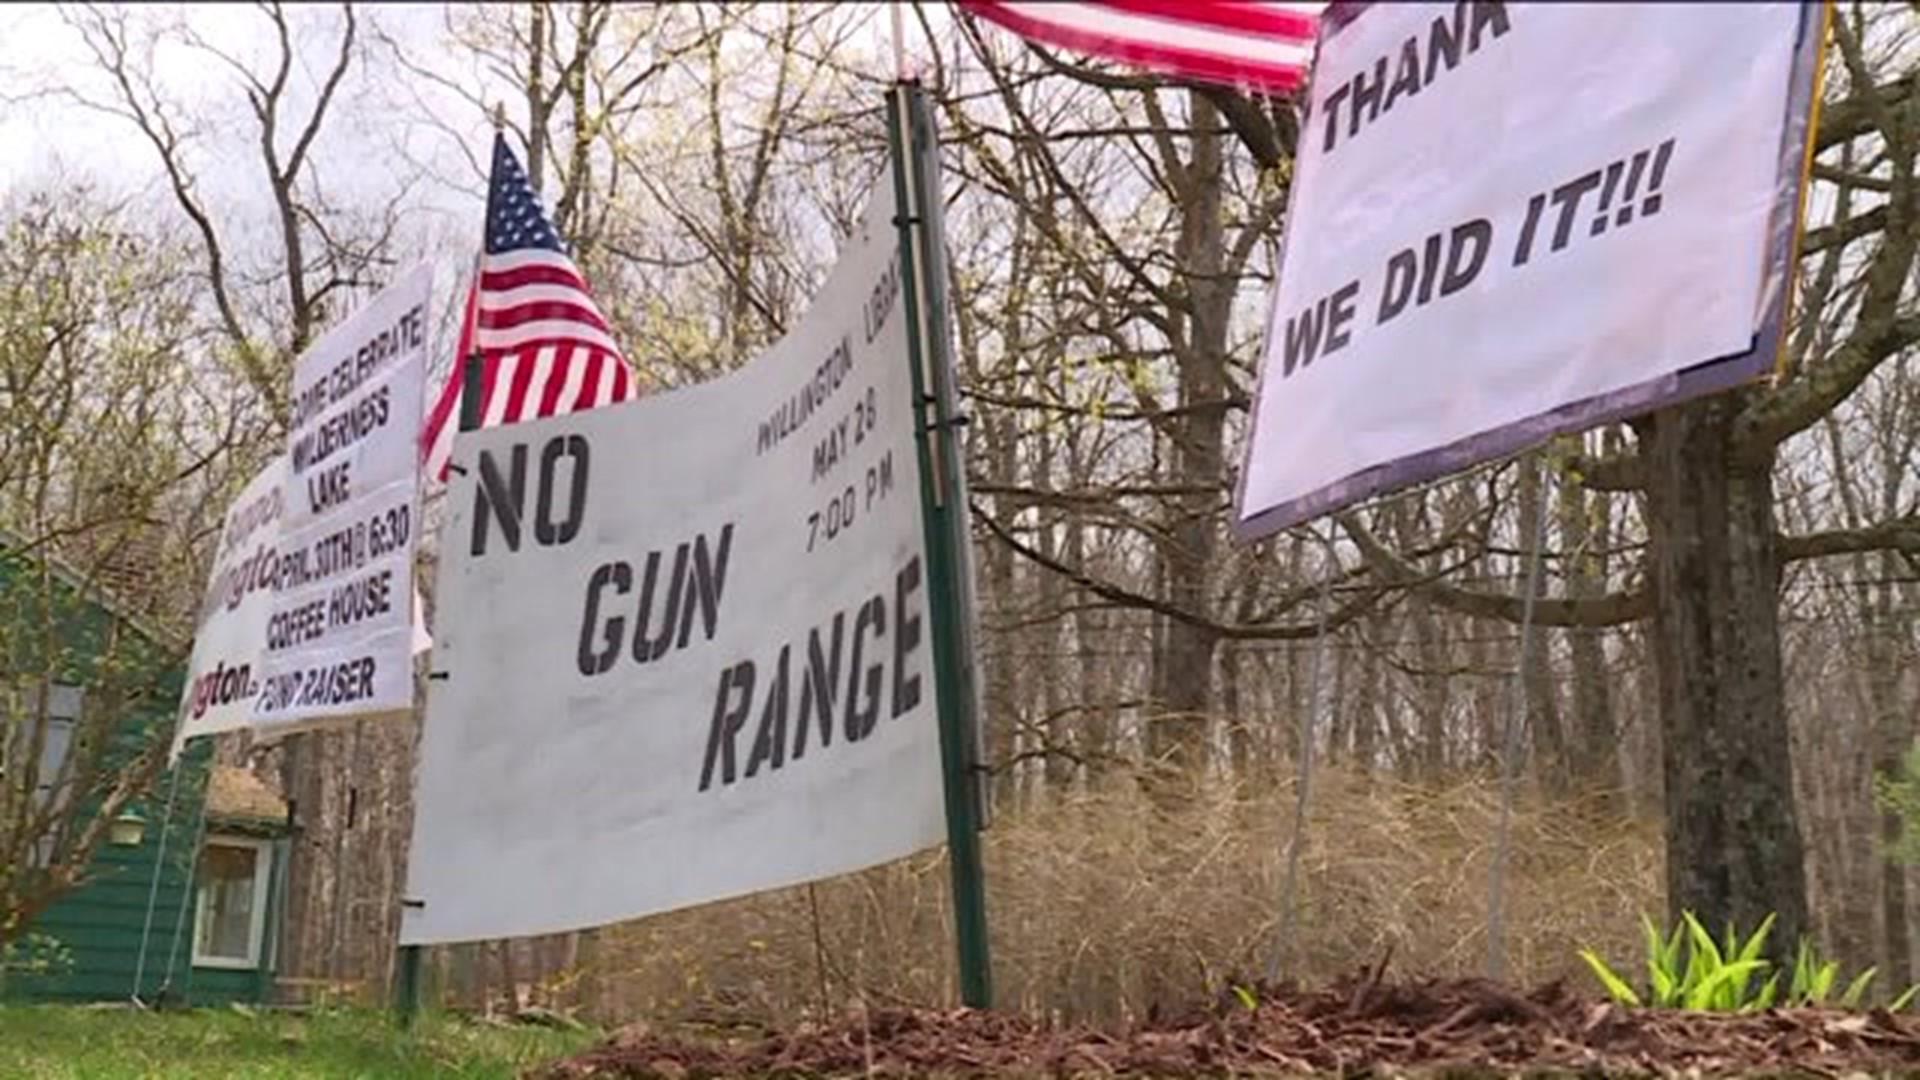 Willington celebrates state`s decision to drop proposed gun range in town